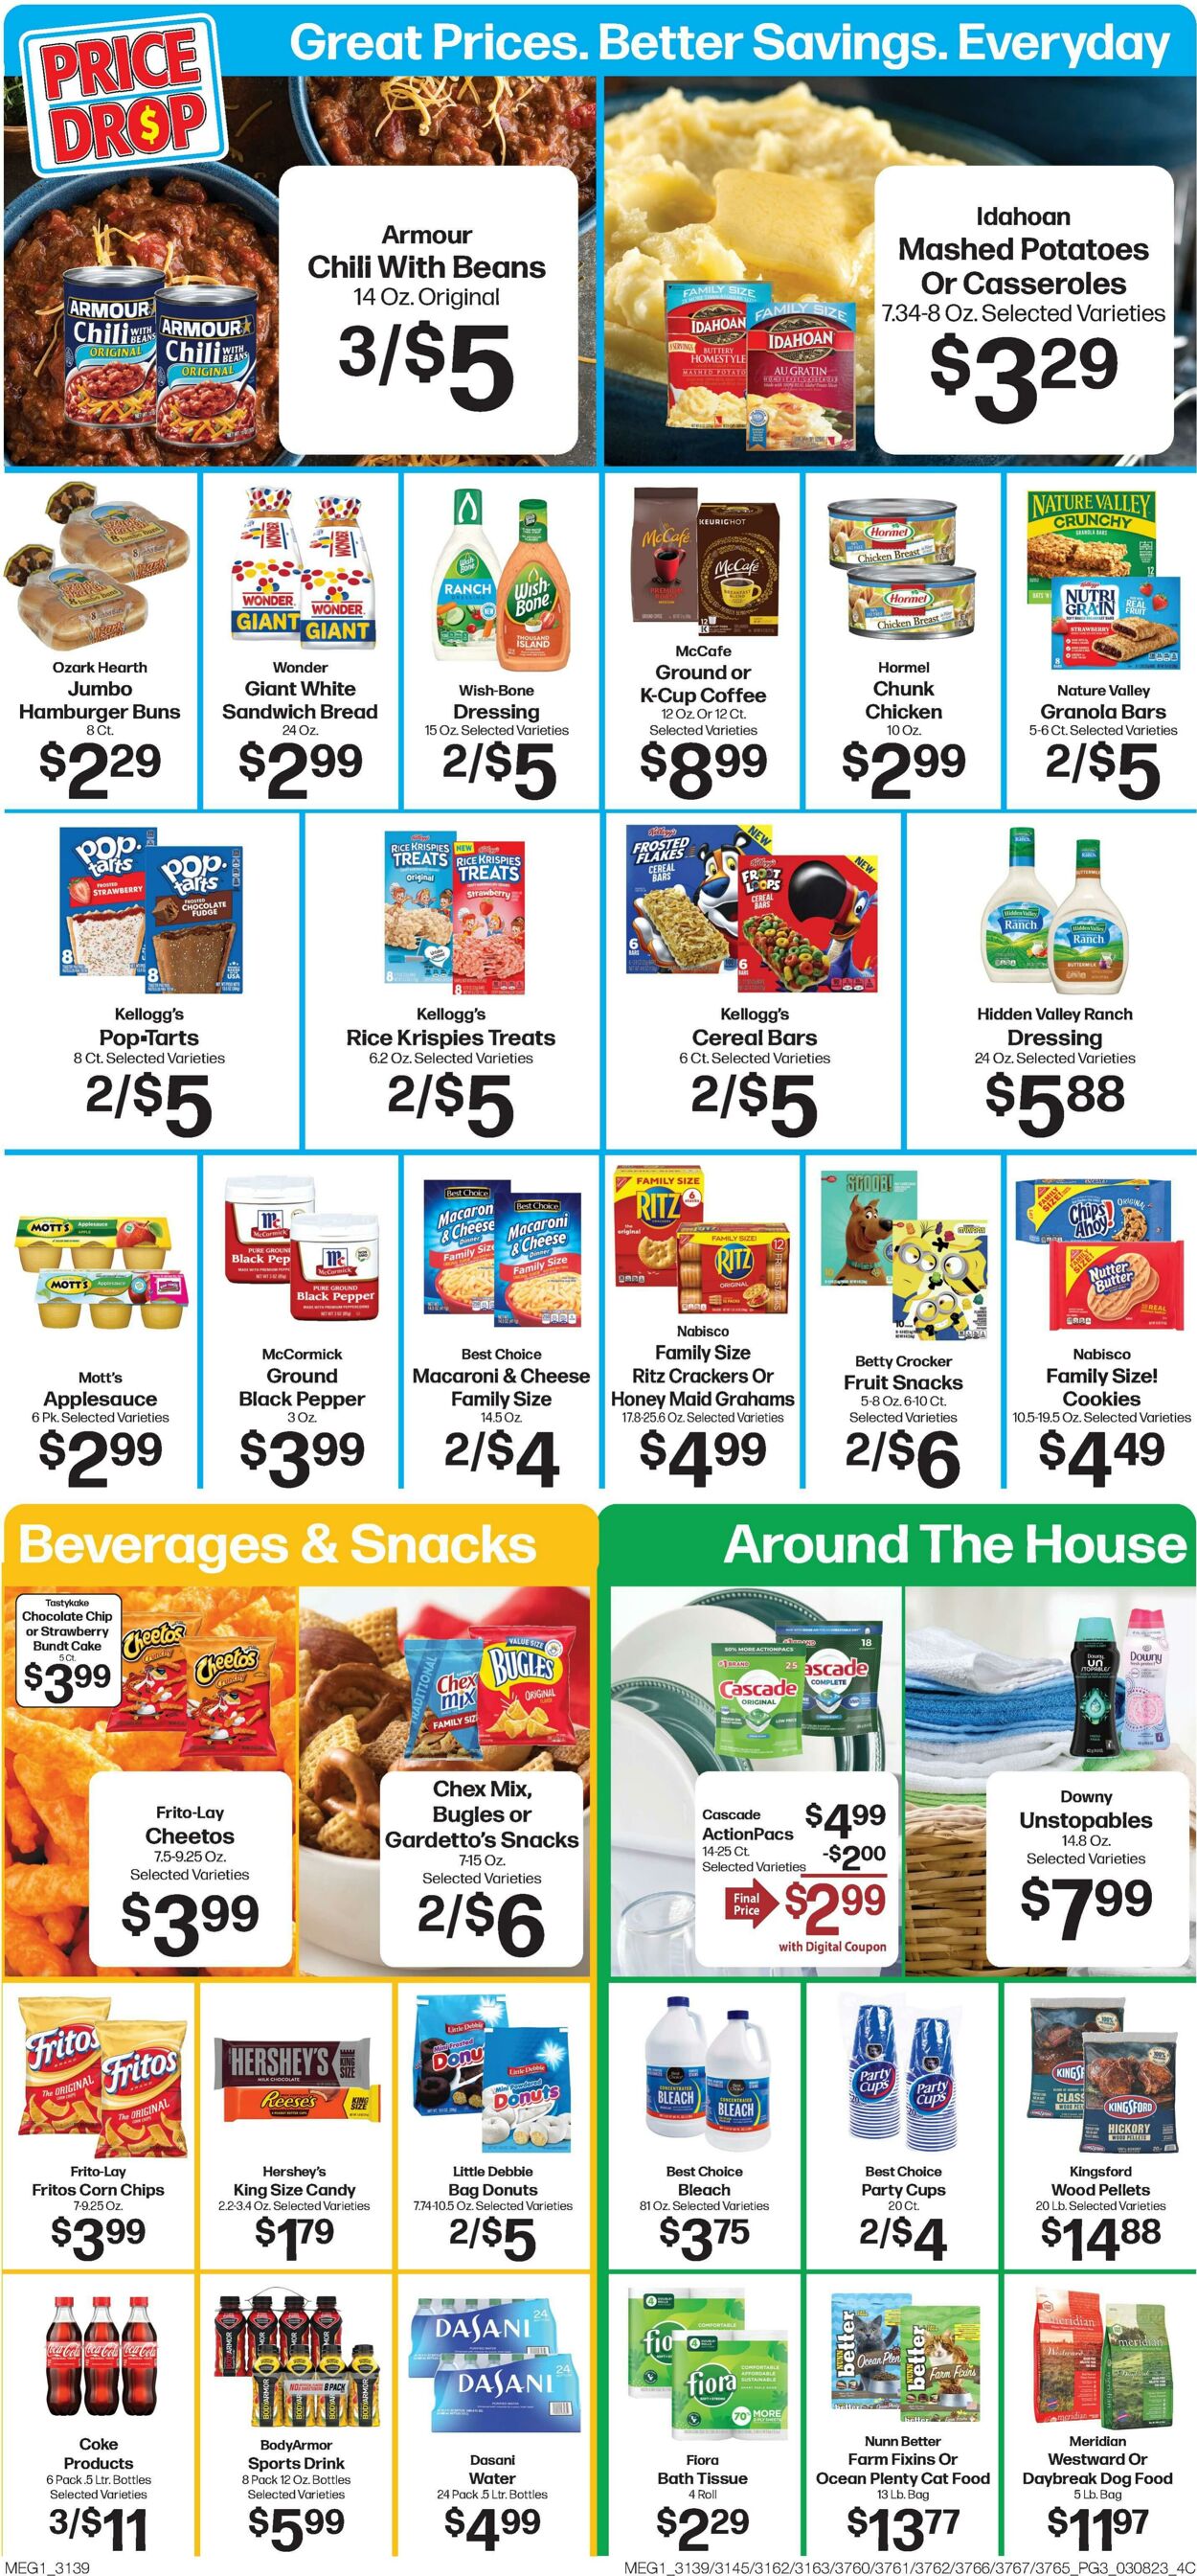 Weekly ad Hays Supermarkets 03/08/2023 - 03/14/2023